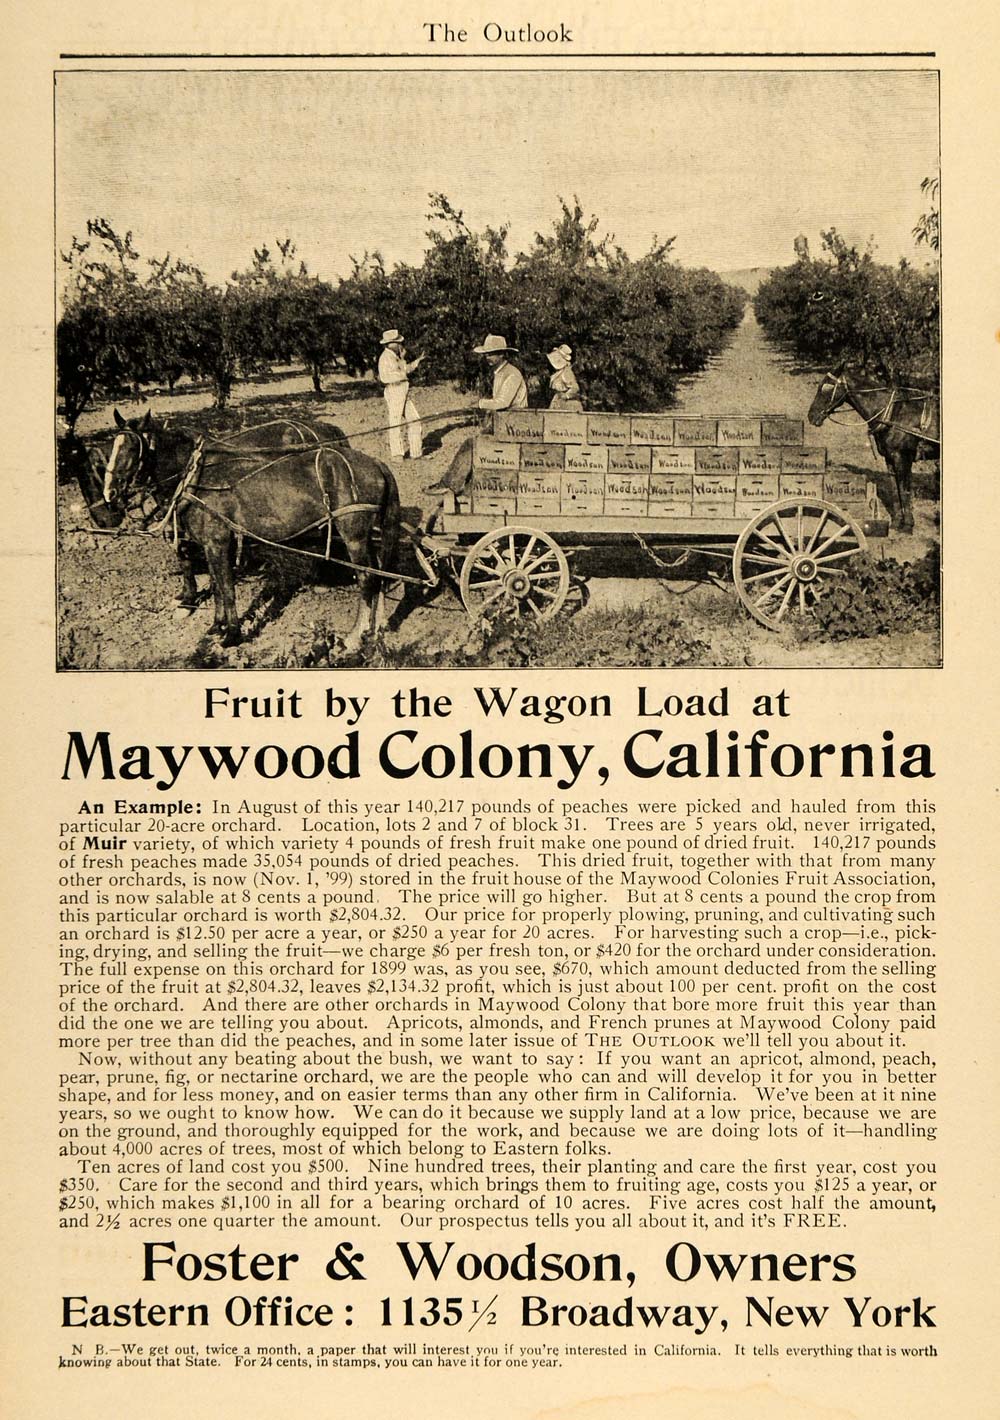 1900 Ad Foster & Woodson Land Acres Farming California - ORIGINAL TOM3